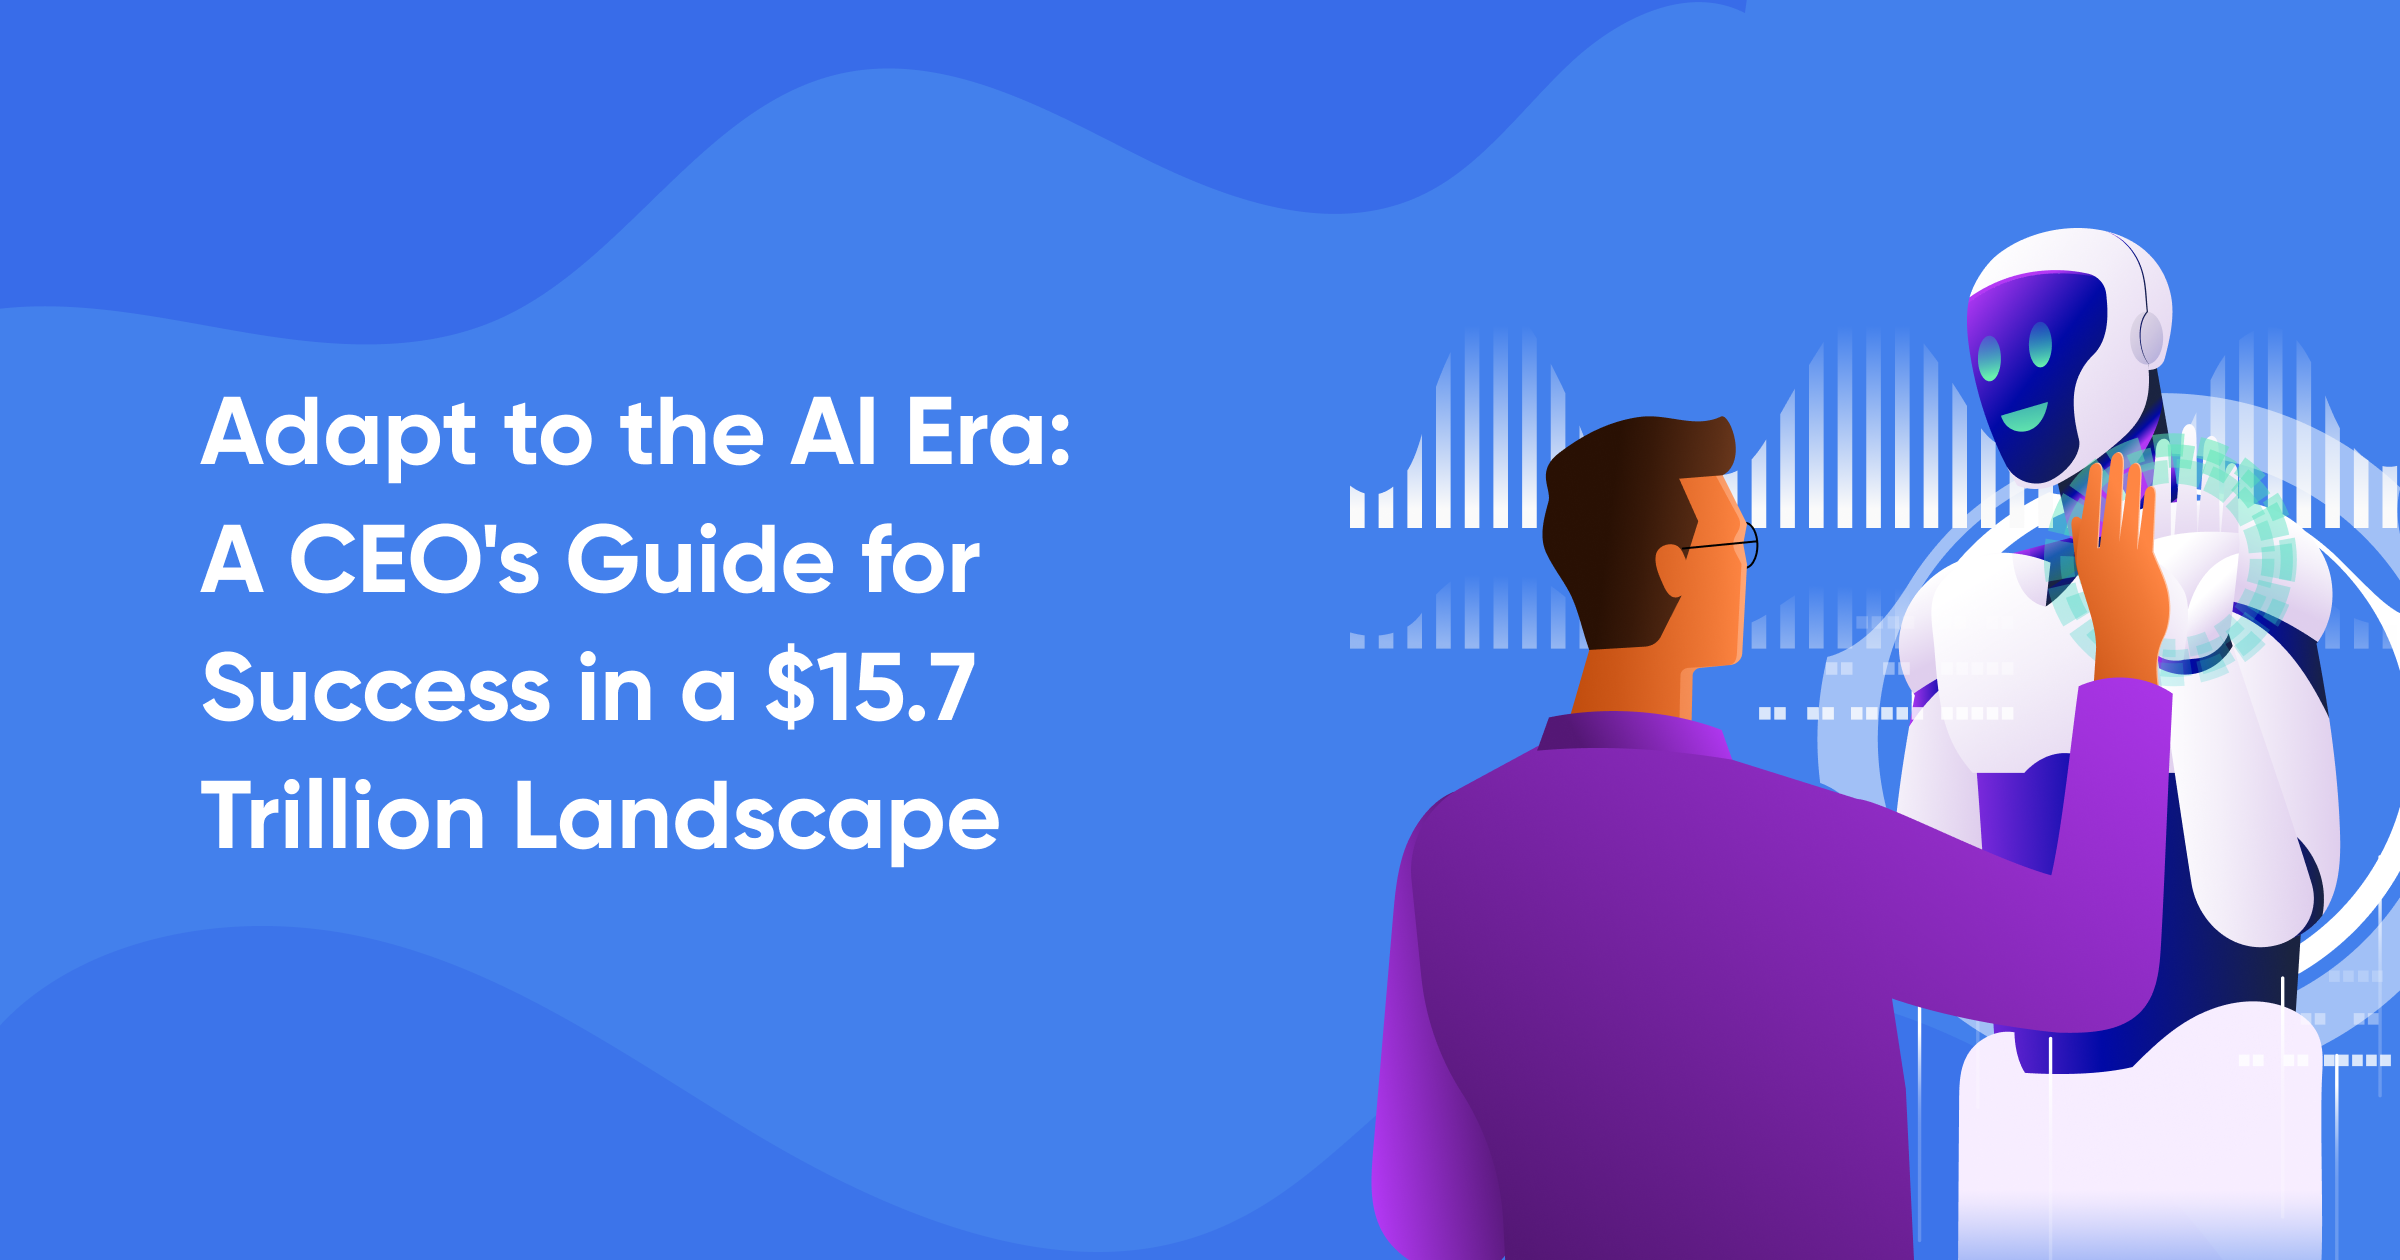 Adapt to the AI Era: A CEO's Guide for Success in a $15.7 Trillion Landscape